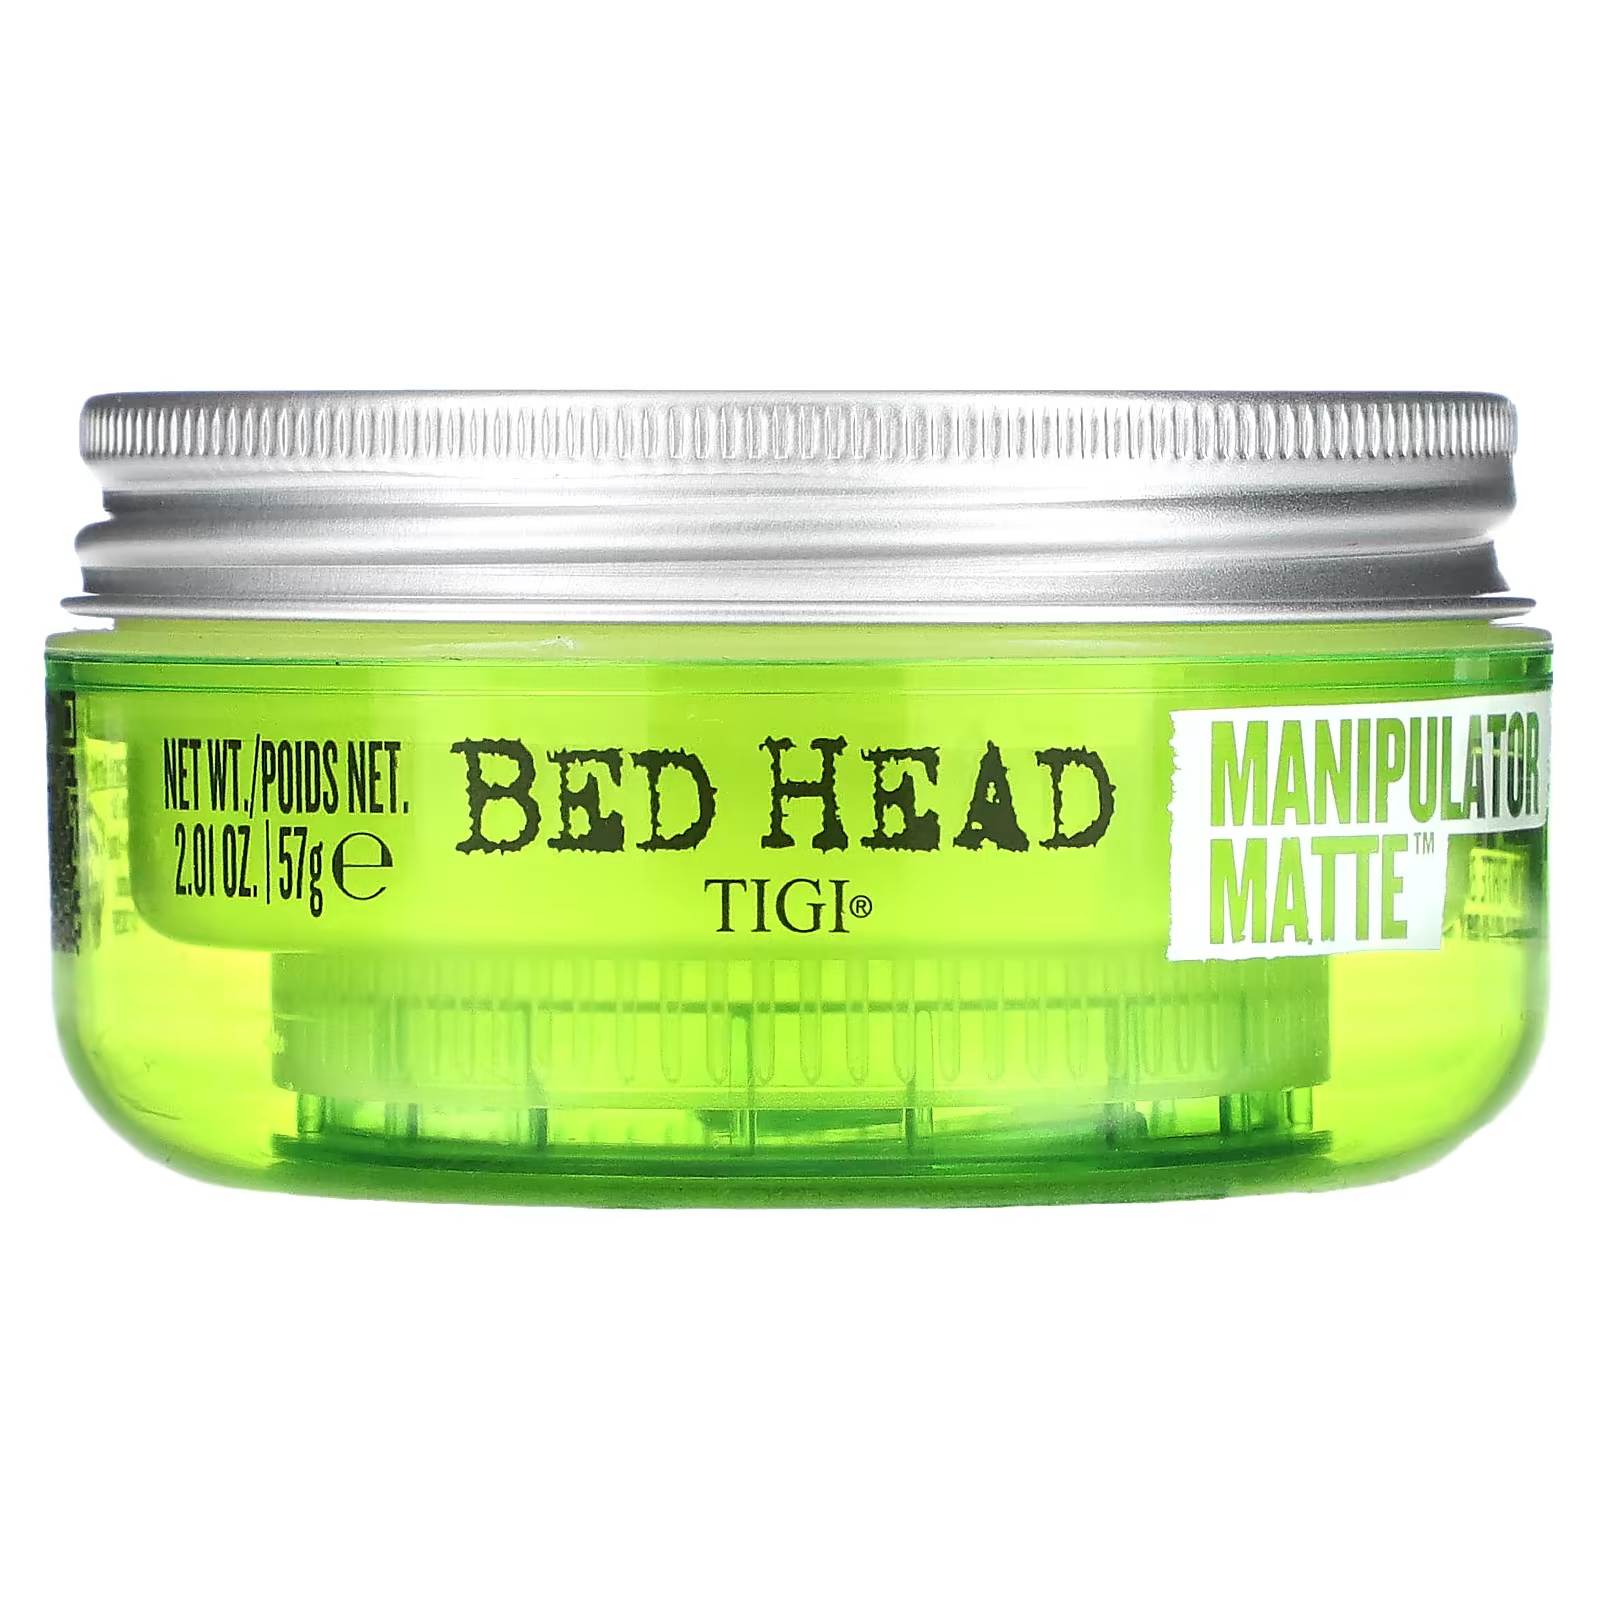 Матовый манипулятор TIGI Bed Head Manipulator, 2,01 унции (57 г) tigi bed head матовый манипулятор 57 г 2 01 унции